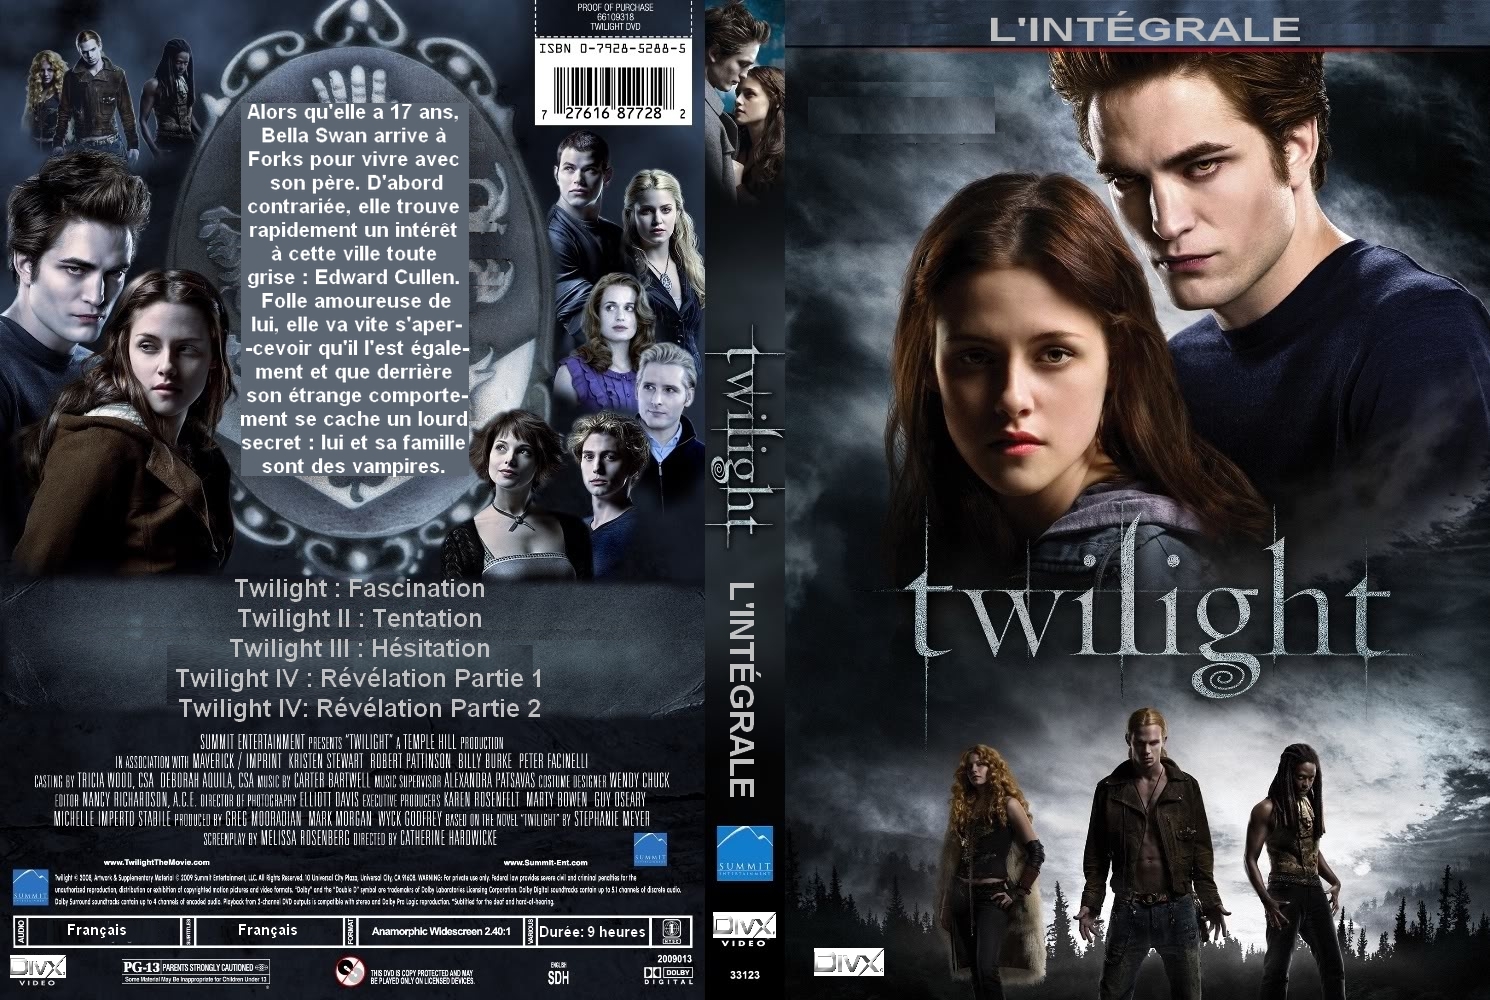 Jaquette DVD Twilight - L